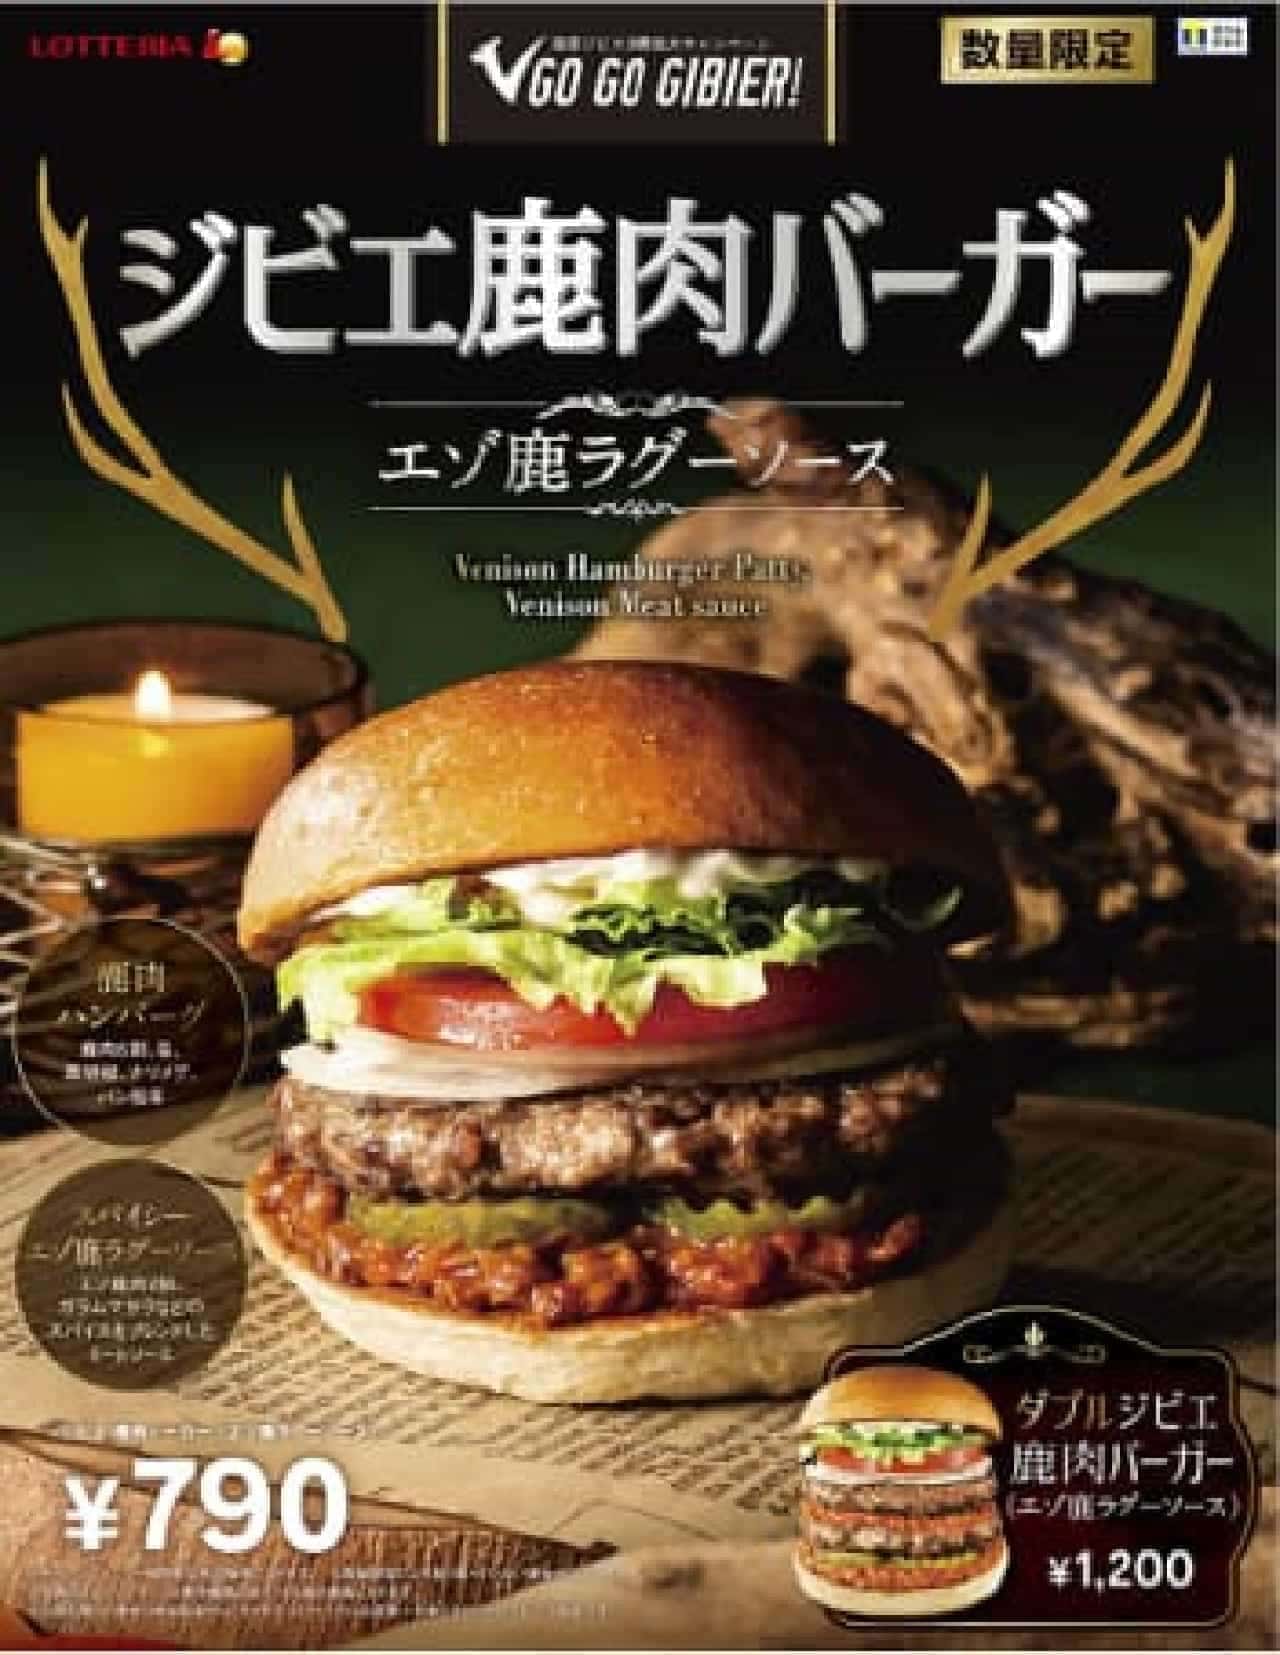 Lotteria "Game Game Venison Burger (Ezo Deer Venison Sauce)" "Double Game Game Venison Burger (Ezo Deer Venison Sauce)"